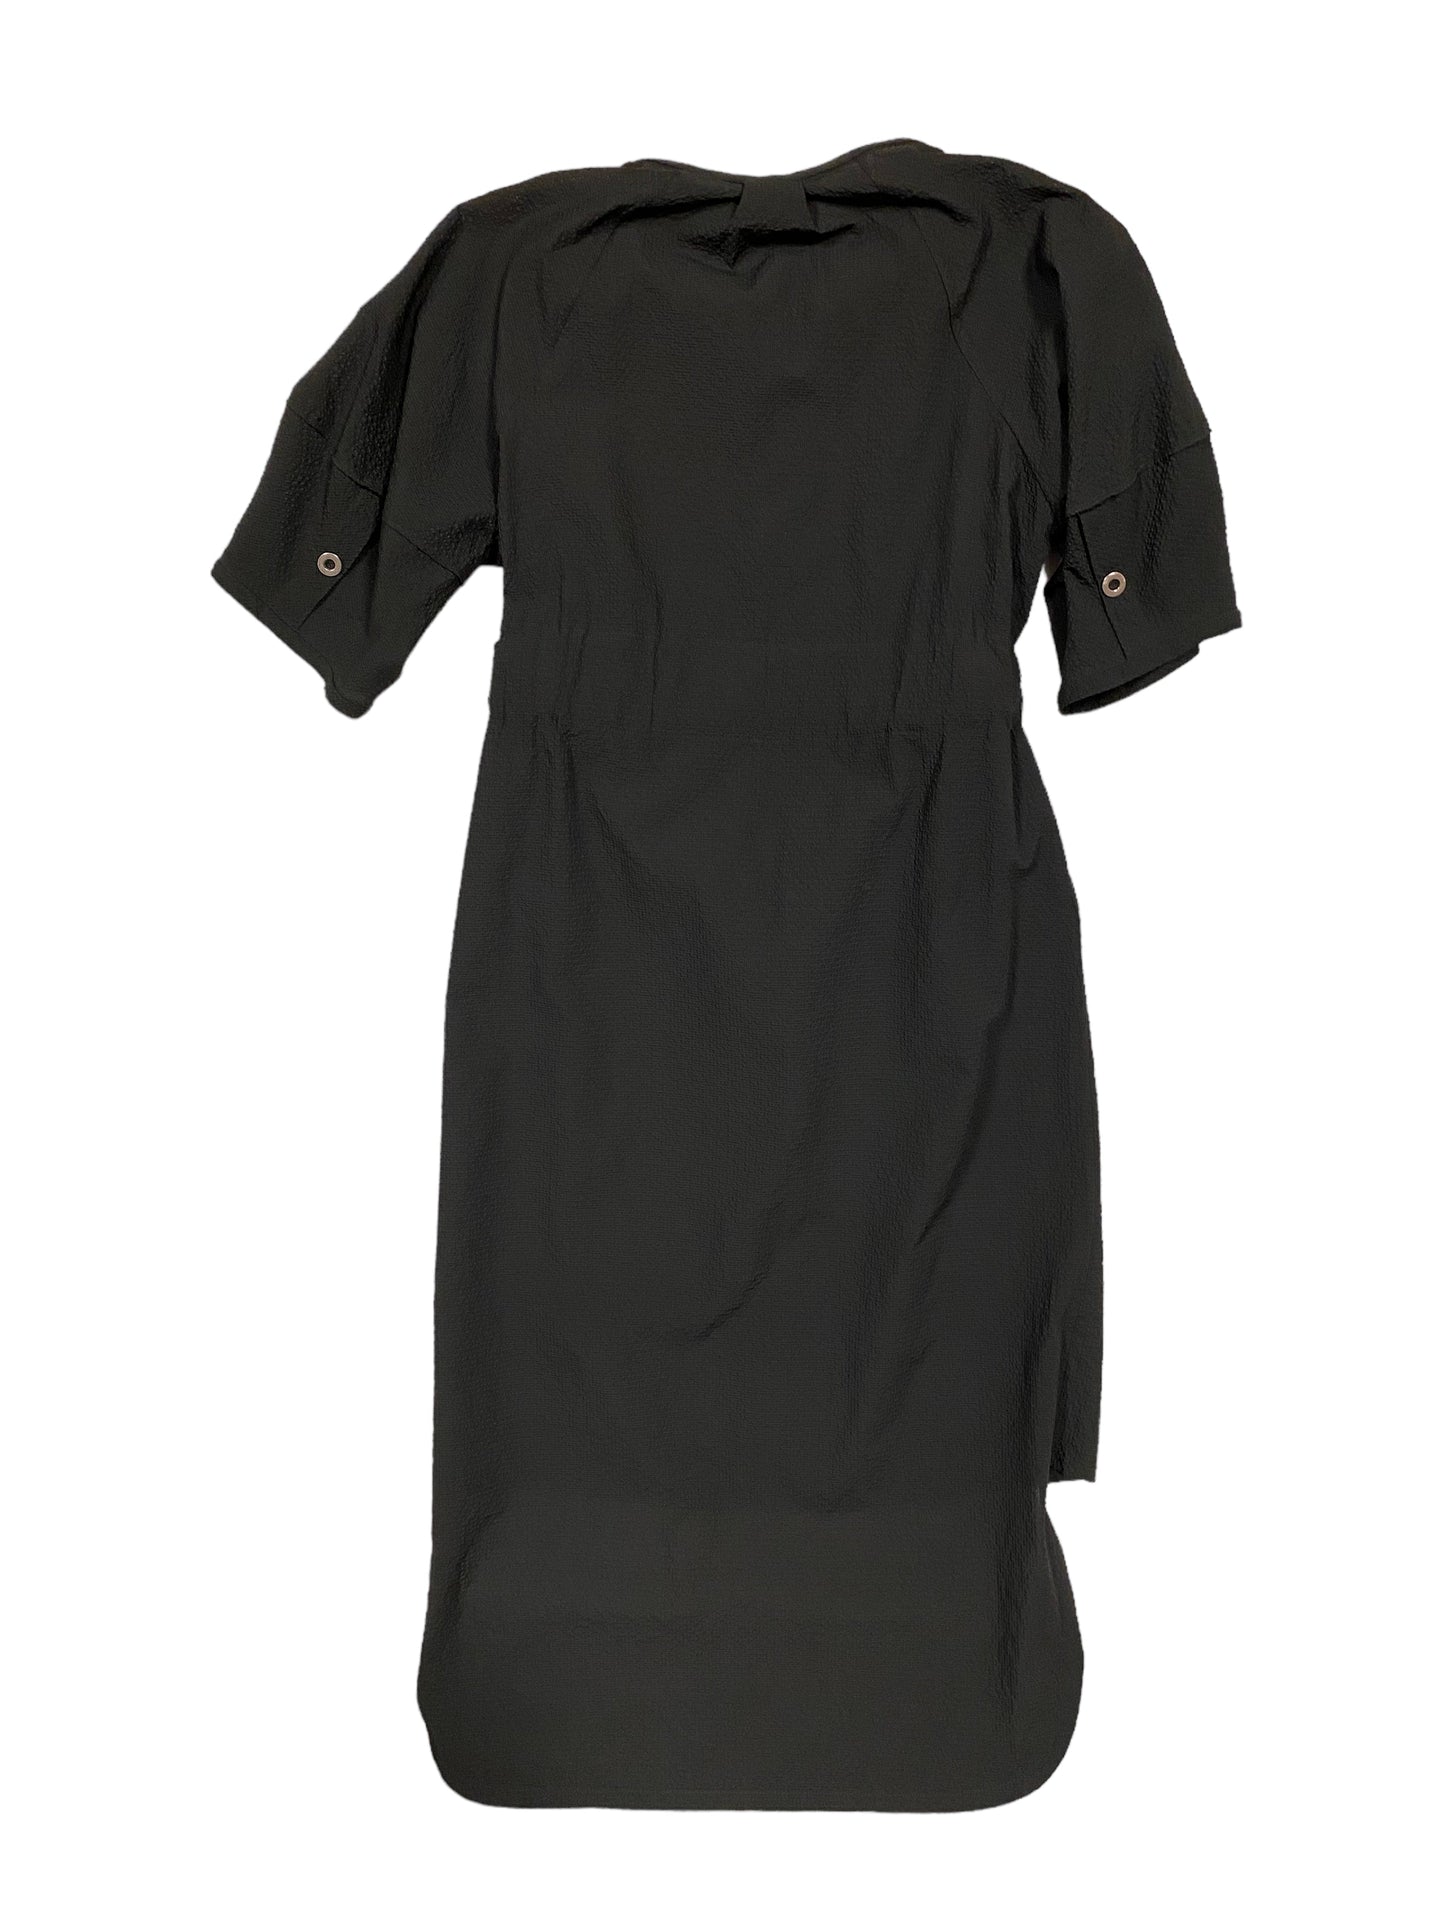 Black Dress Designer Yigal Azrouel, Size 8